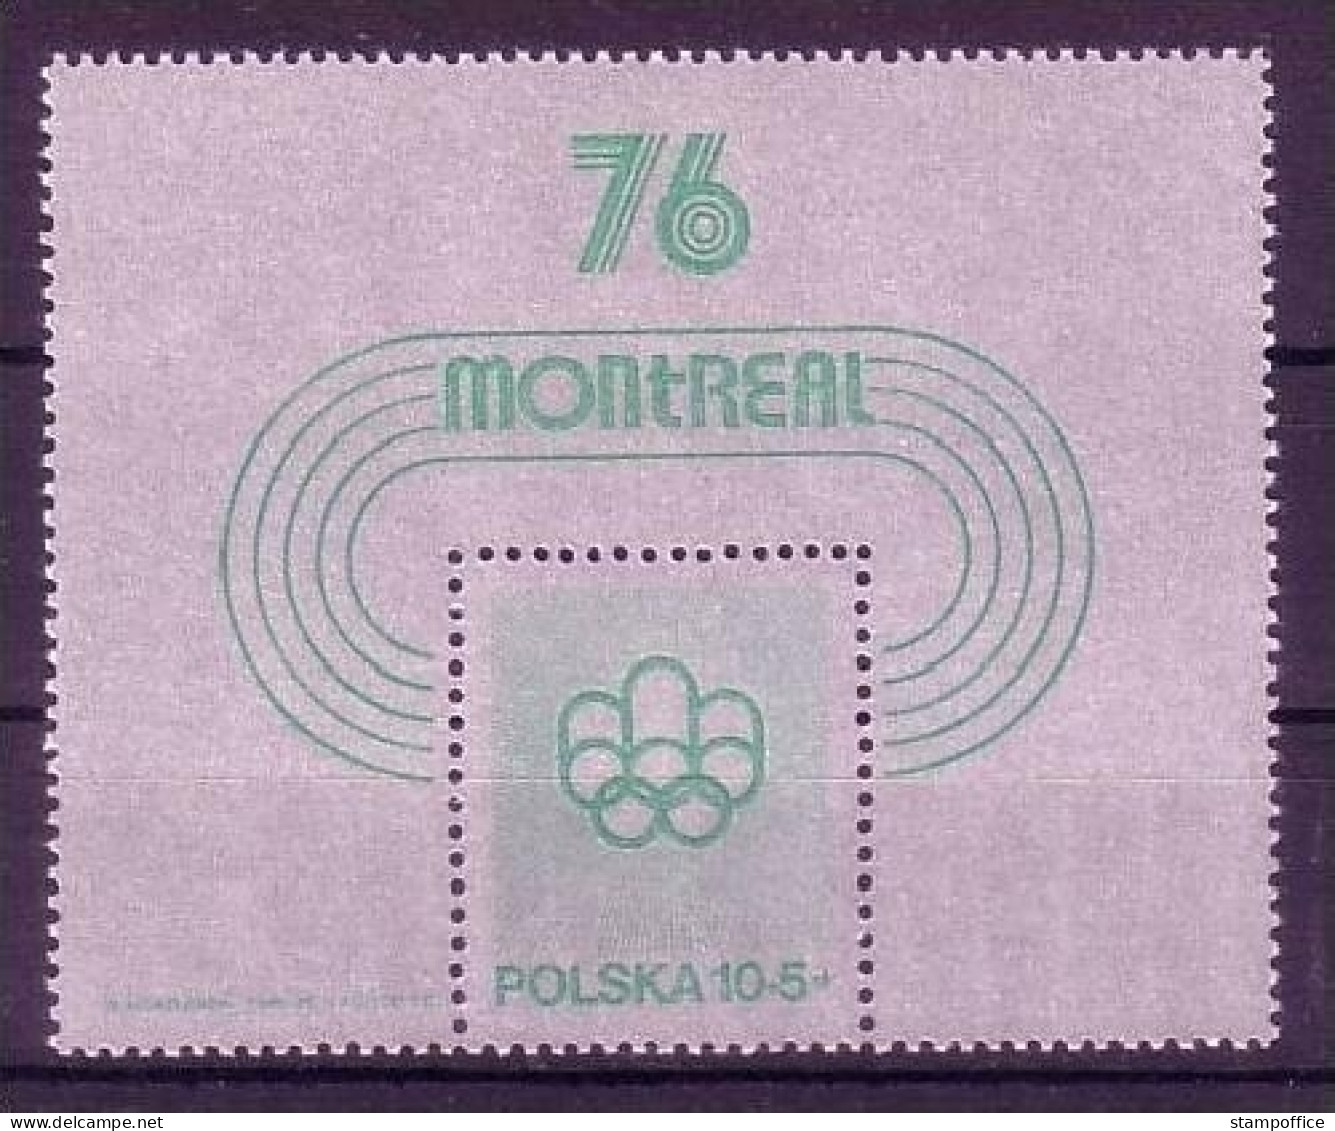 POLEN BLOCK 61 POSTFRISCH(MINT) OLYMPISCHE SOMMERSPIELE MONTREAL 1976 - Verano 1976: Montréal